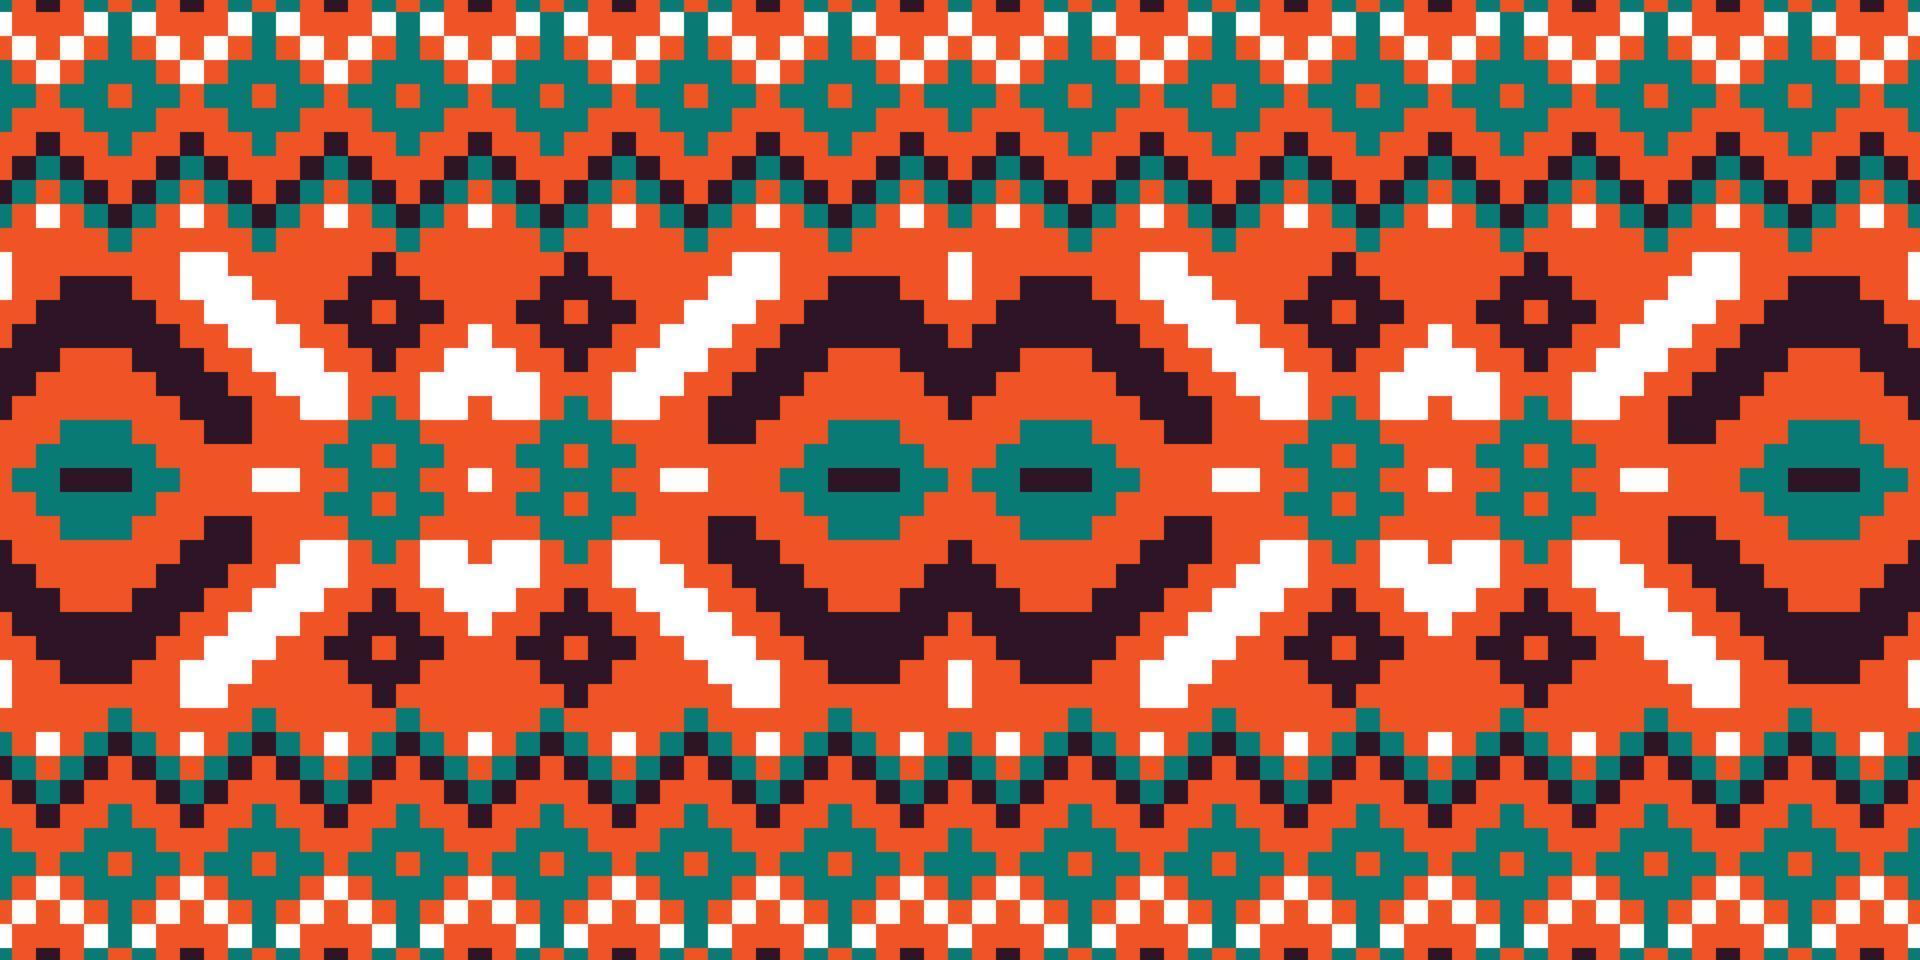 traditionell afrikansk amerikansk etnisk geometrisk sömlös aztekisk mönsterdesign tyg matta chevron textil prydnad dekorativ tapet turkisk boho stambroderi bakgrund vektor